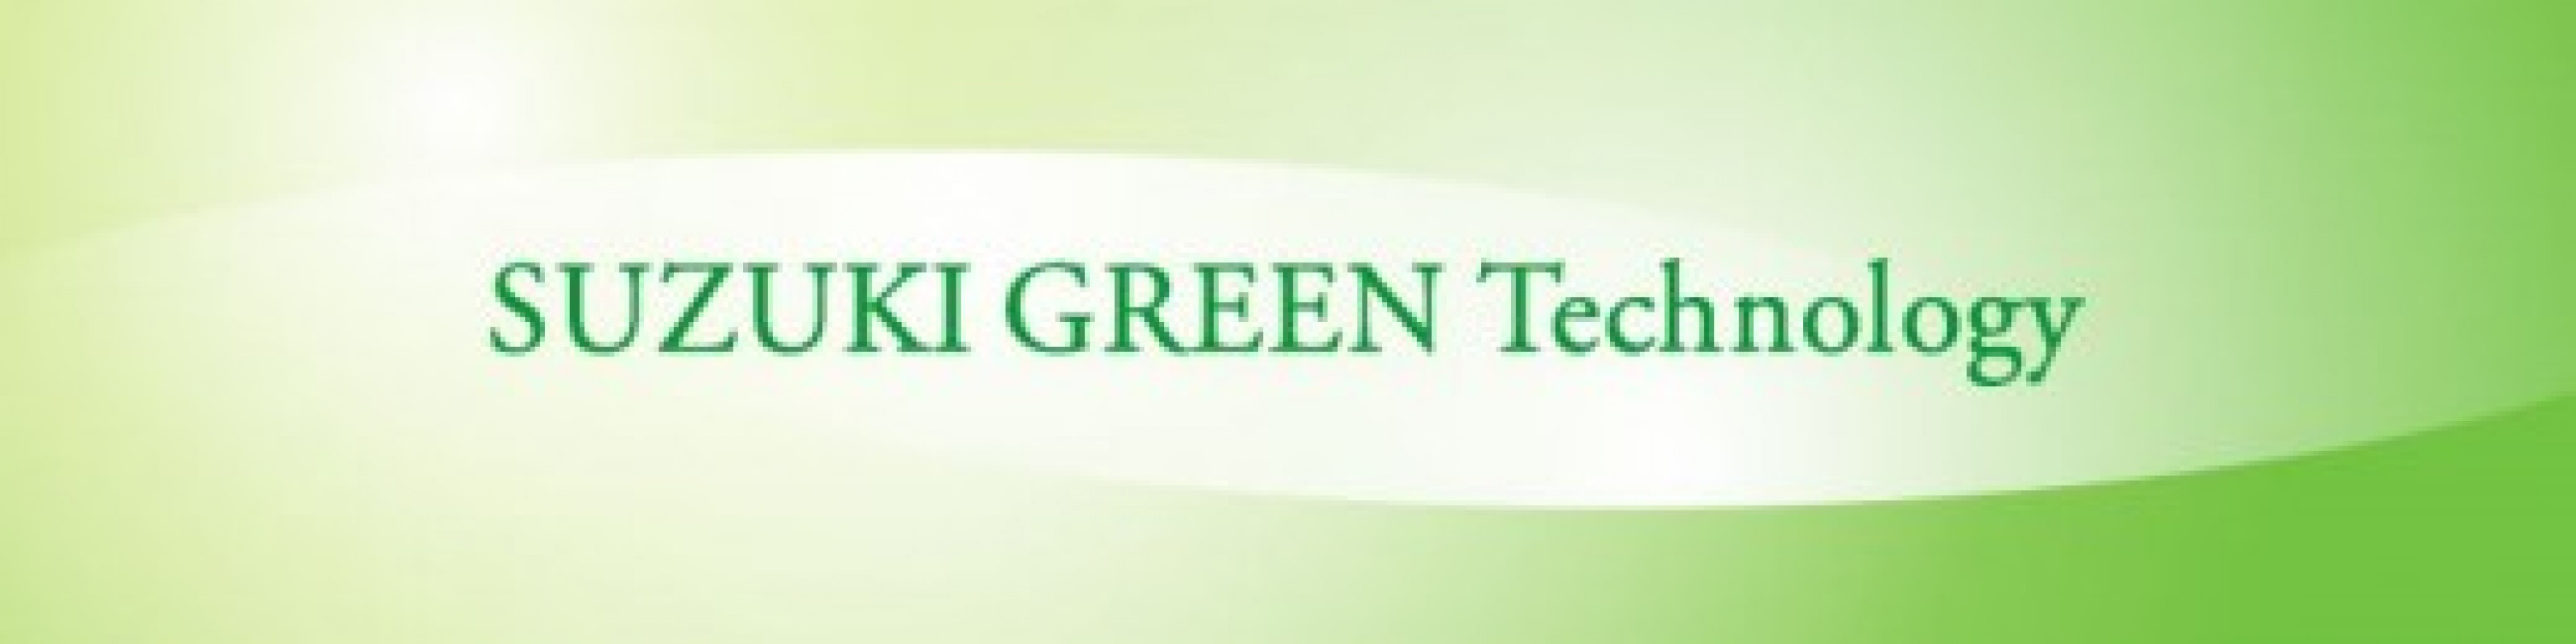 green tecnology suzuki